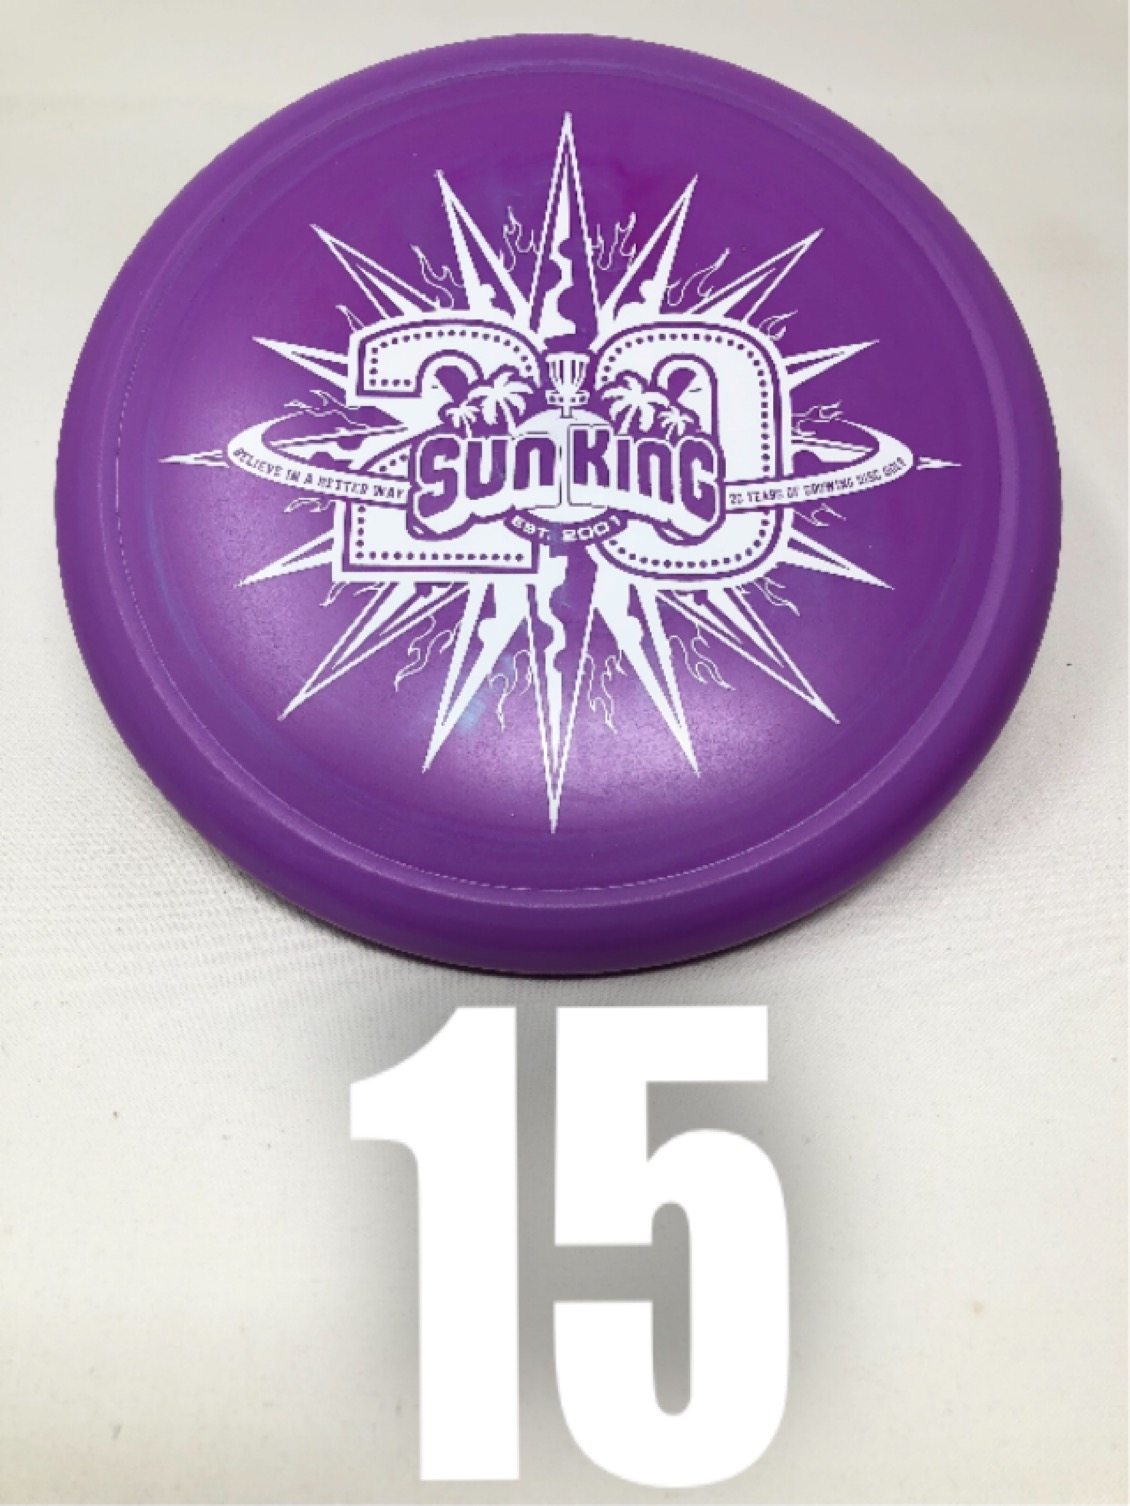 Innova KC Pro Animal (Sun King - 20th Anniversary)